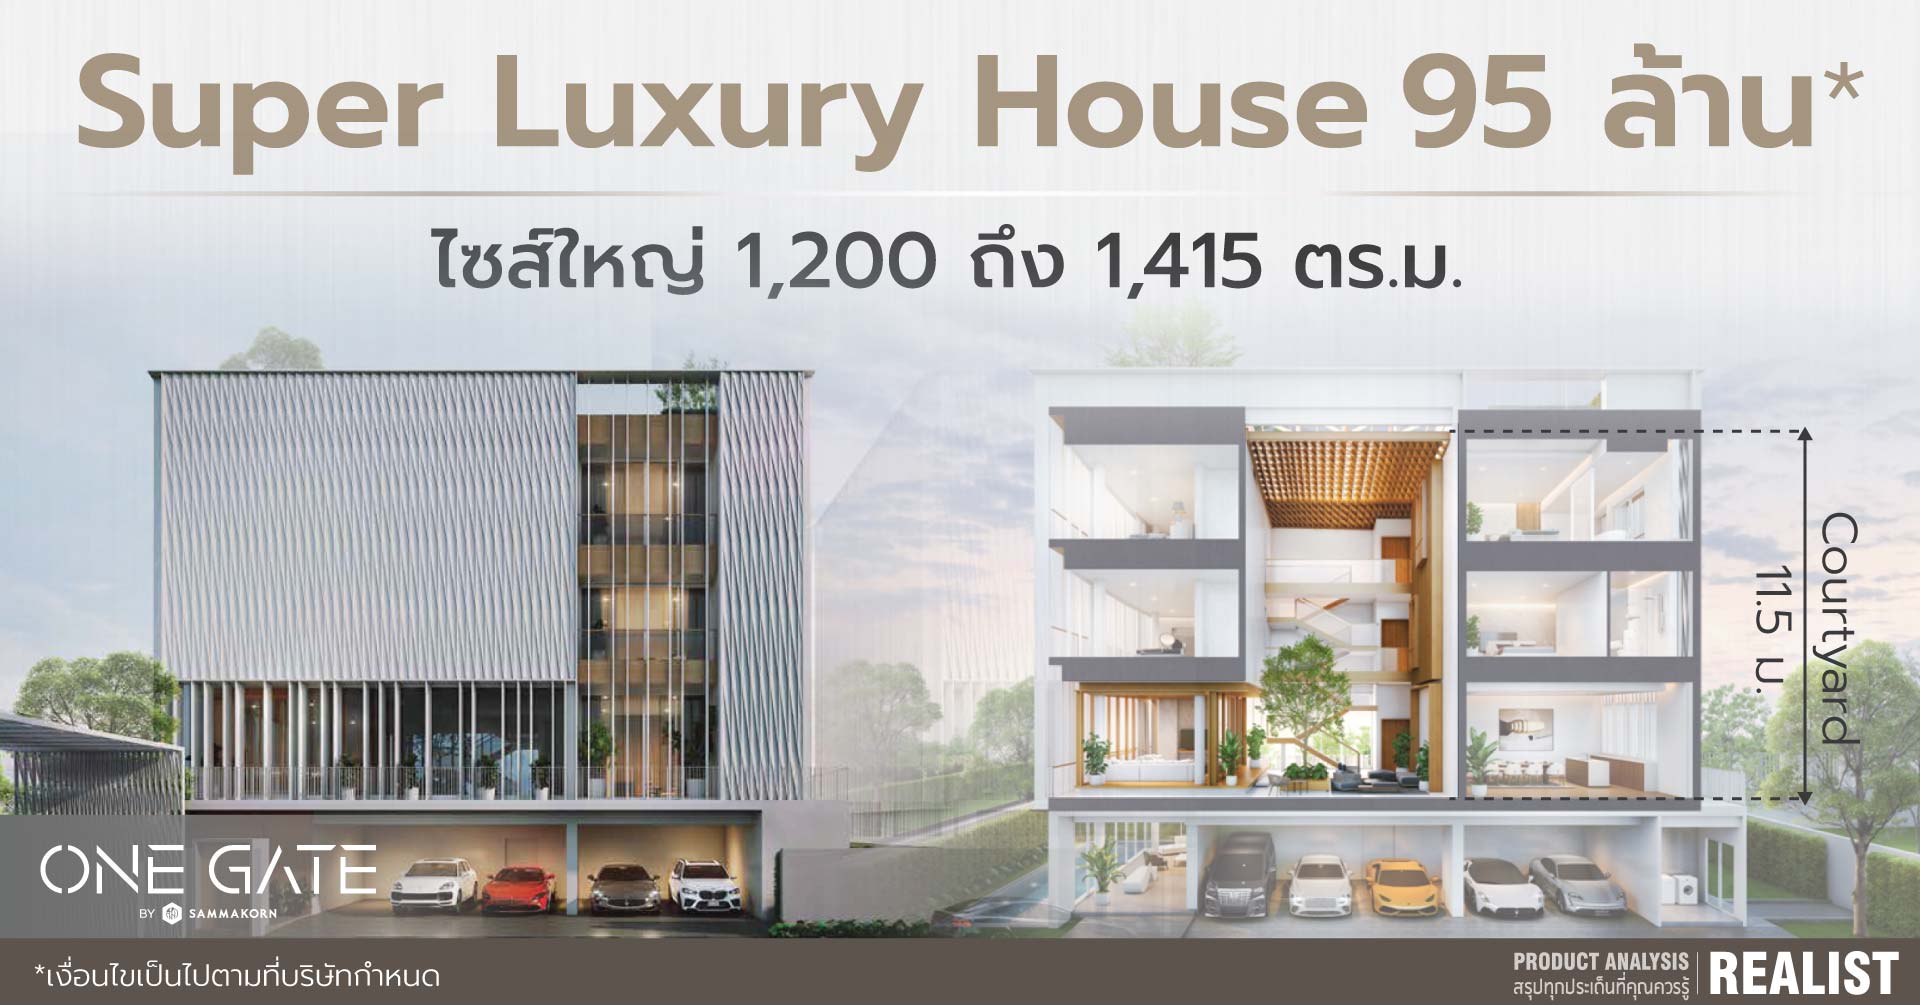 One Gate เอกมัย - รามอินทรา Super Luxury House เพียง 3 หลัง เริ่ม 95 ล้าน*